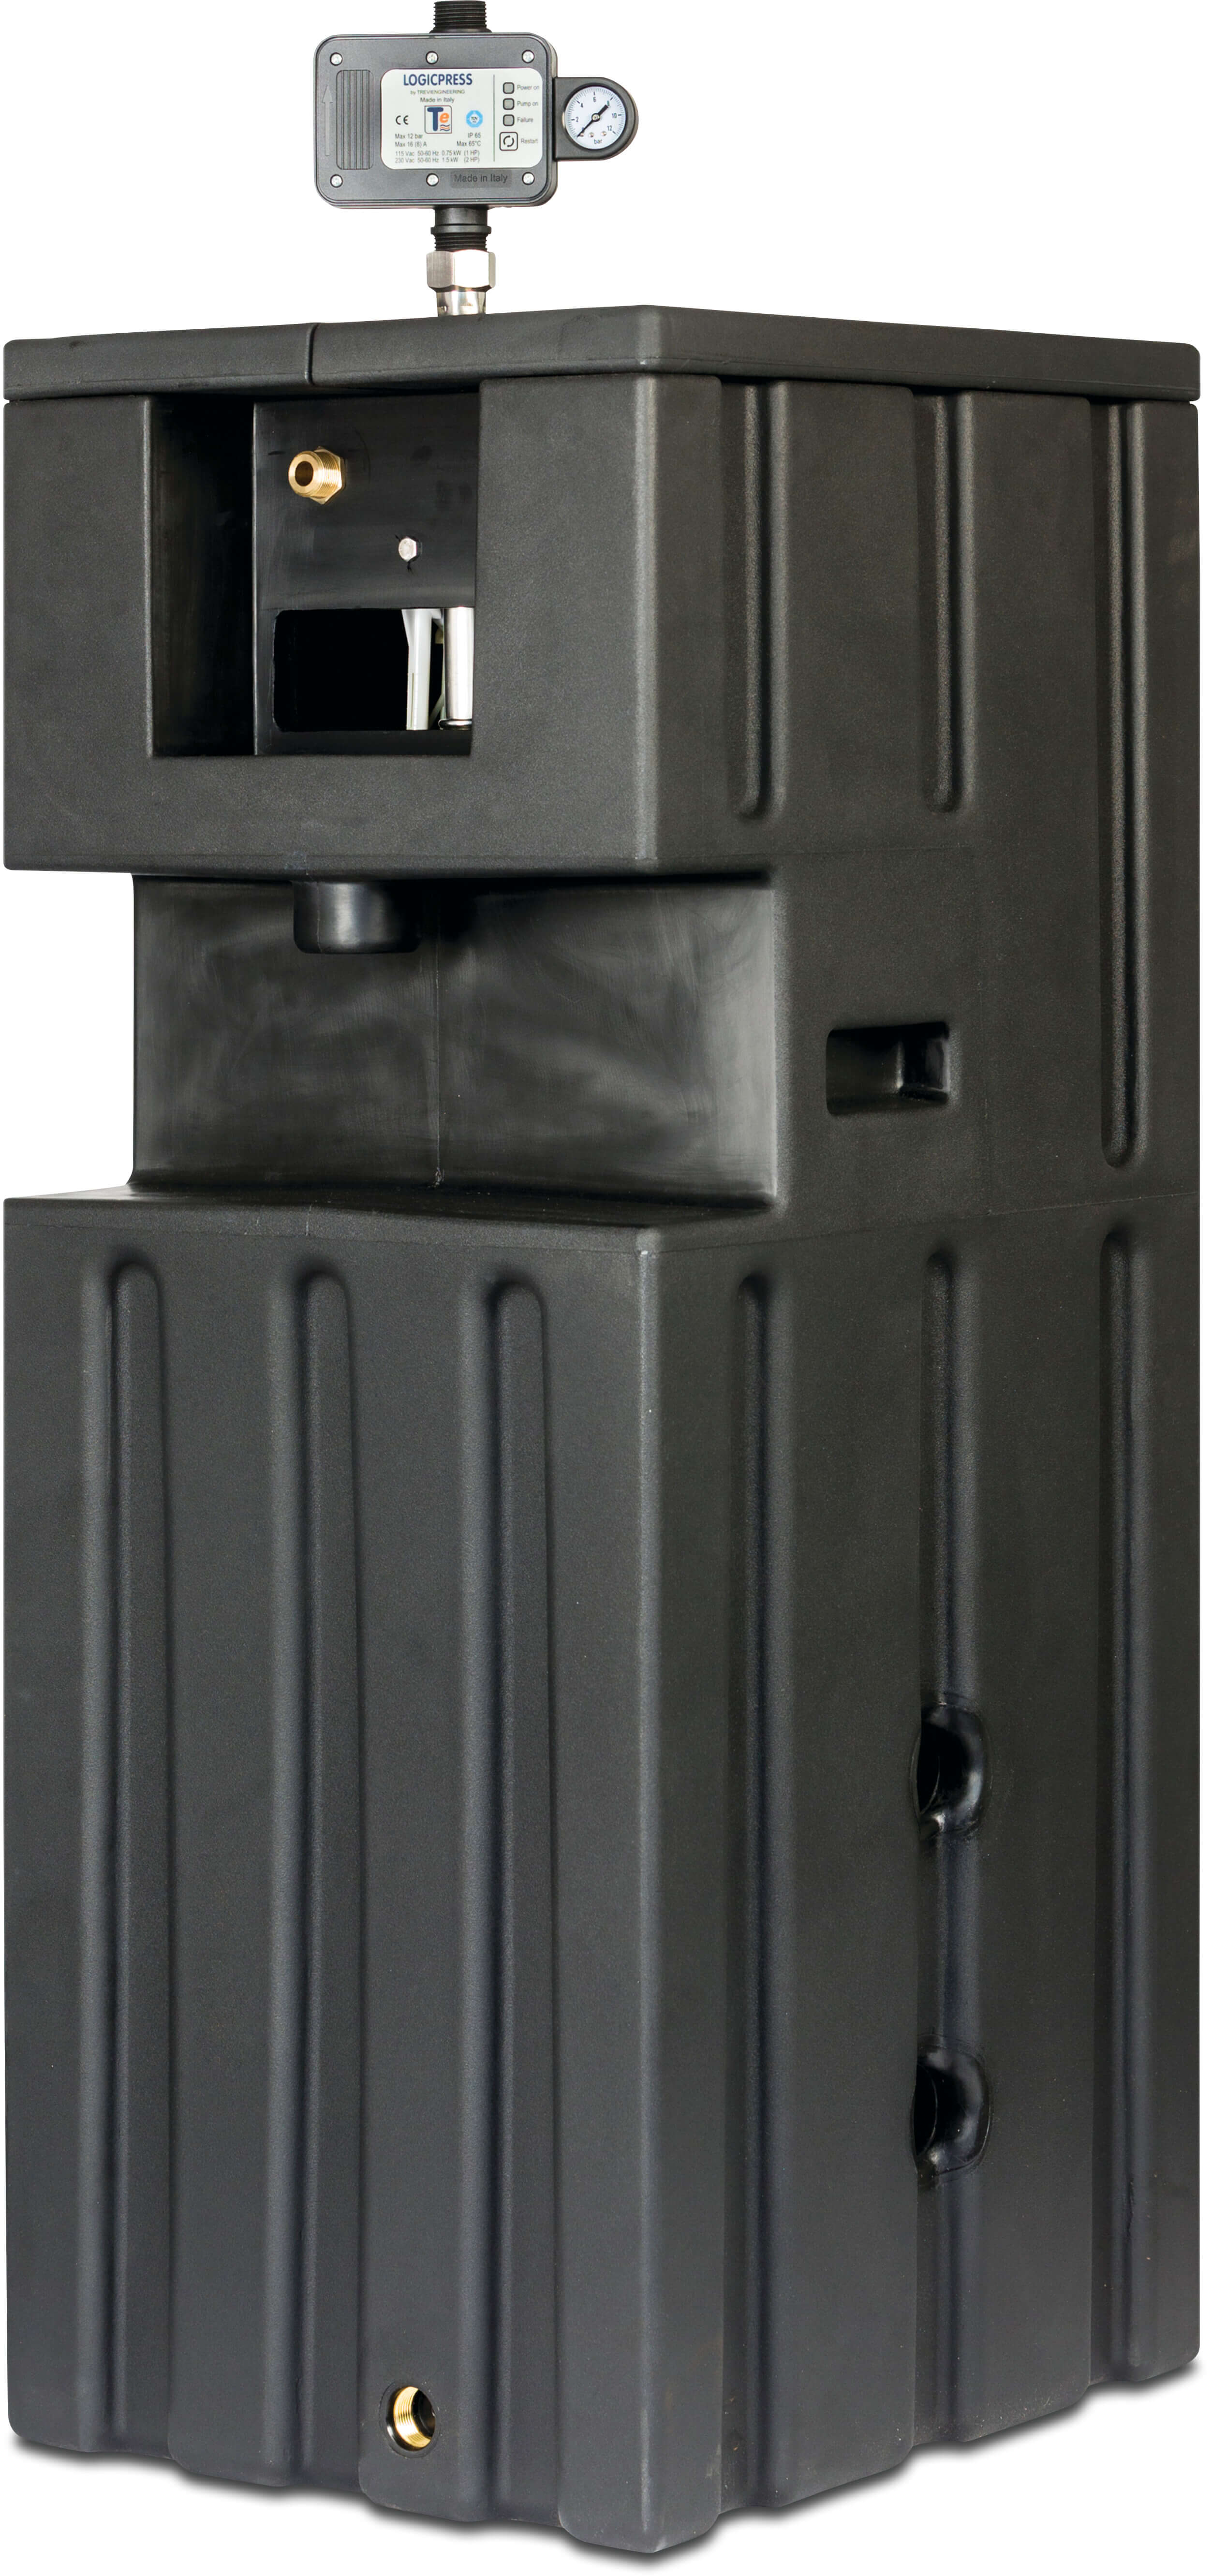 Zulaufbehälter 3/4" x 1" Außengewinde 230VAC BELGAQUA type Combi DSCT mit Minisub & Logicpres Set